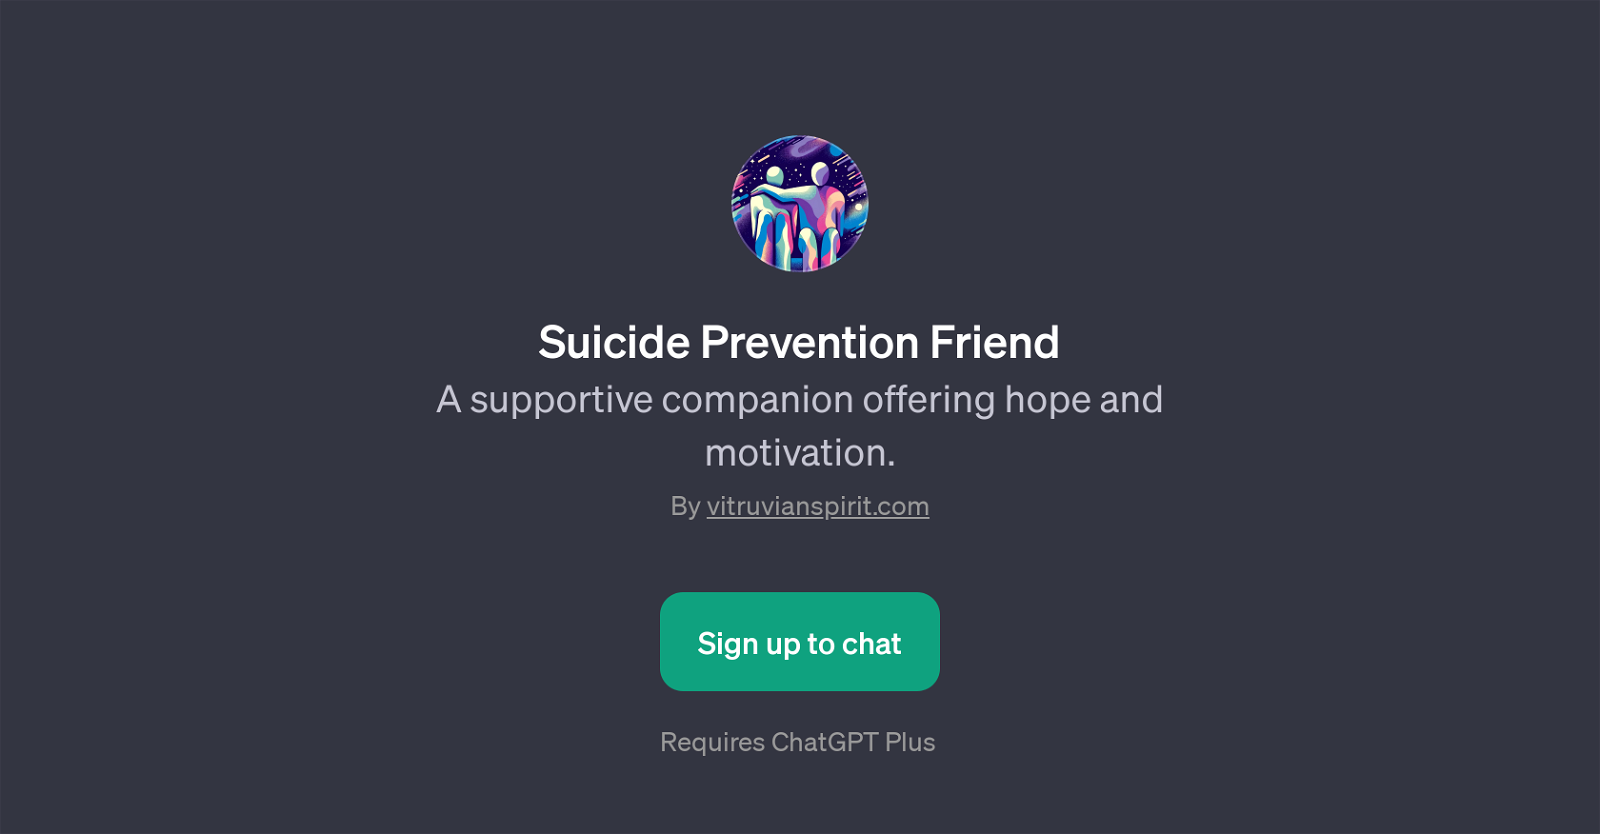 Suicide Prevention Friend website